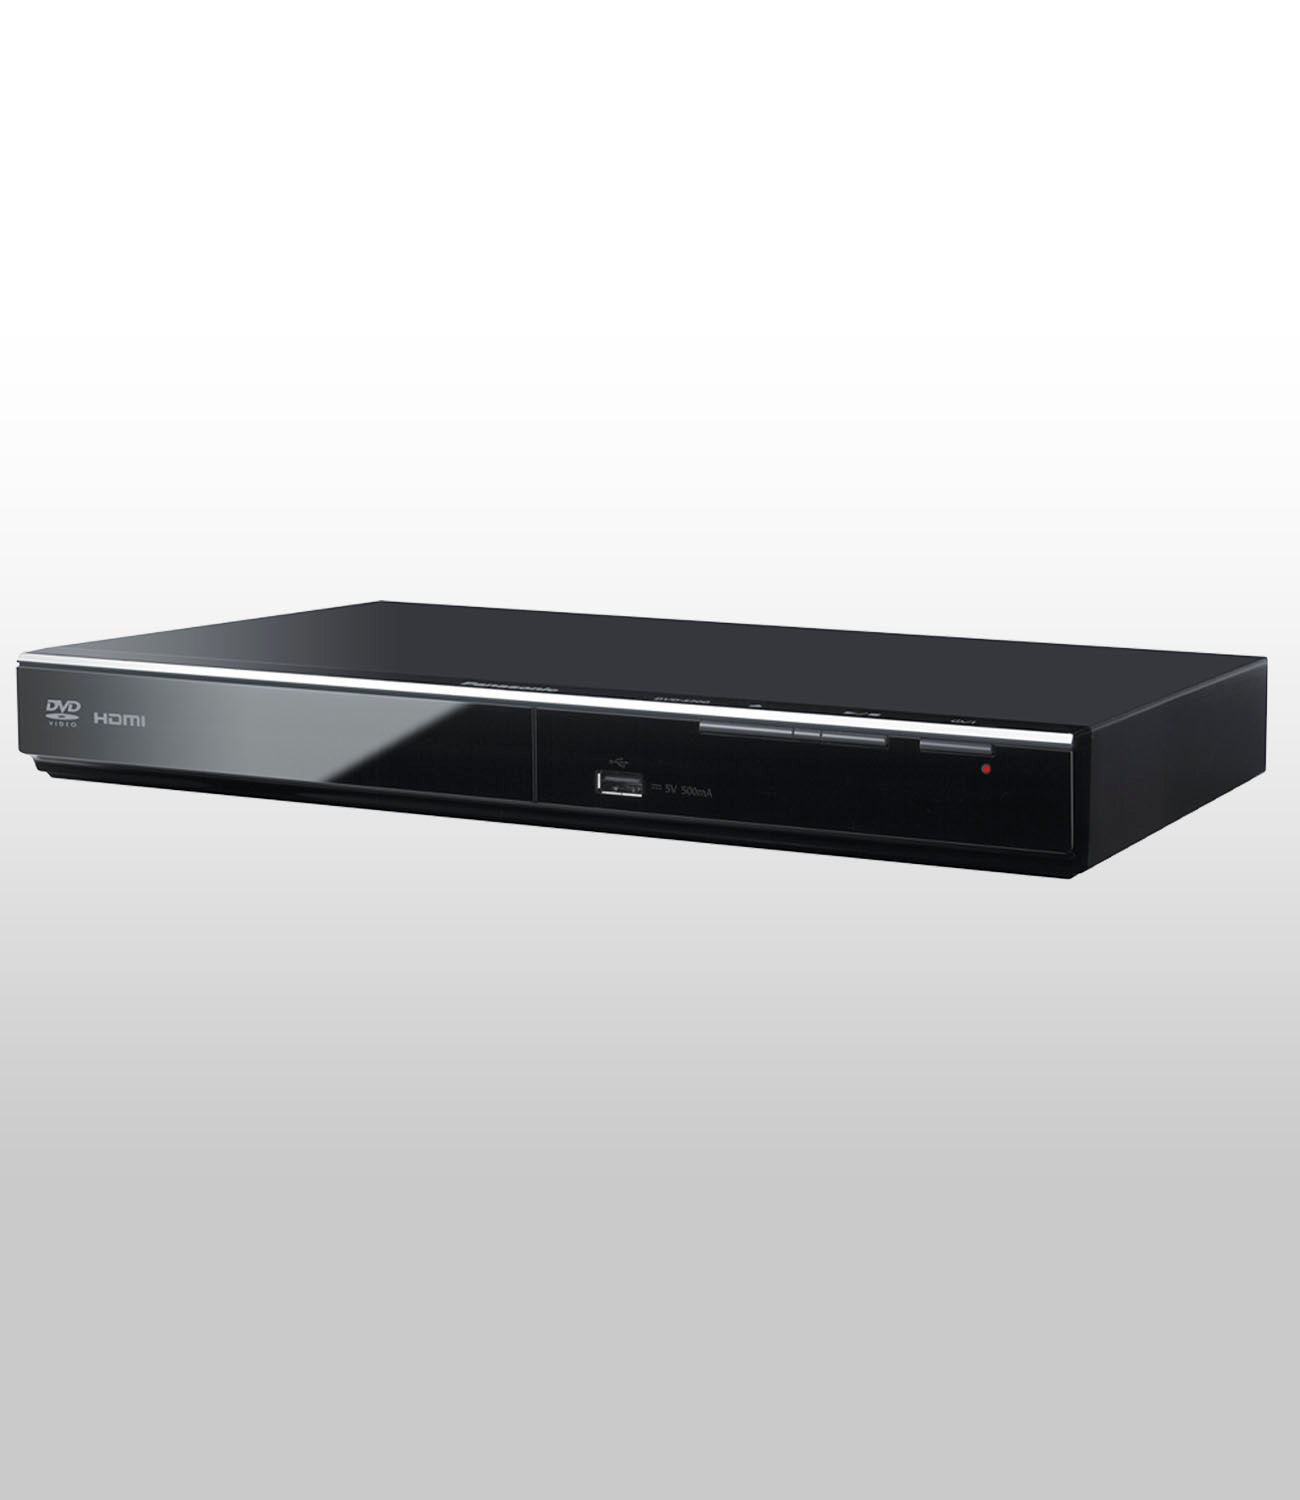 Panasonic DVD Player Dolby Digital Sound, 1080p HD Upscaling - DVD